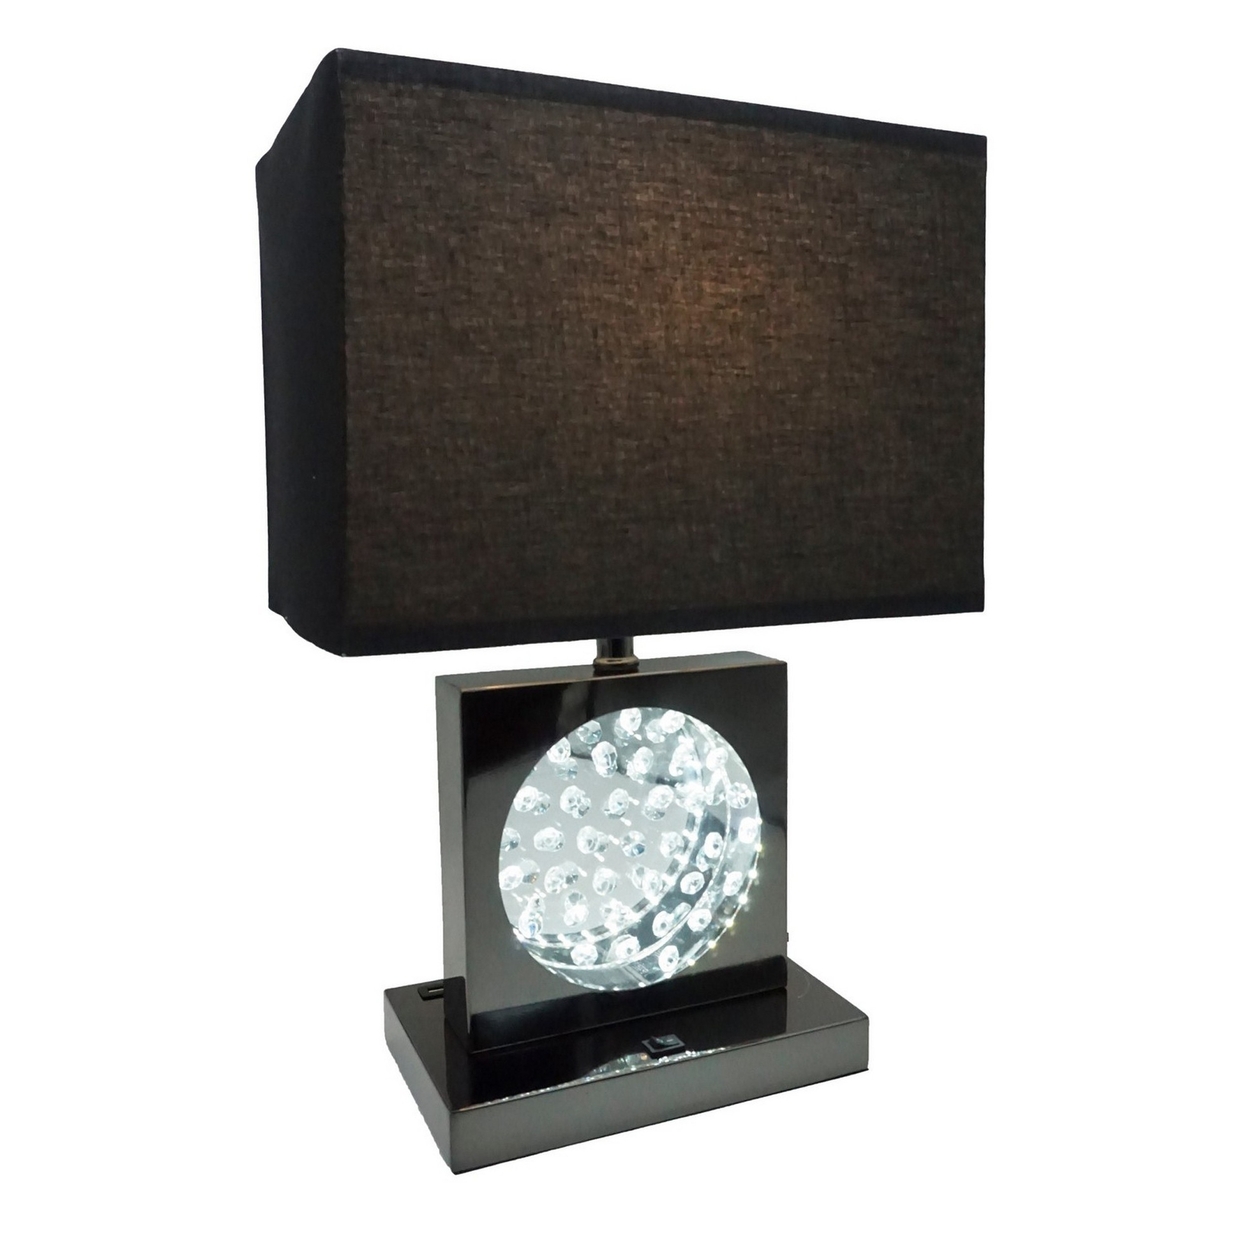 Rohi 22 Inch Table Lamp, Black Fabric Shade, Nickel Base, LED Accents- Saltoro Sherpi